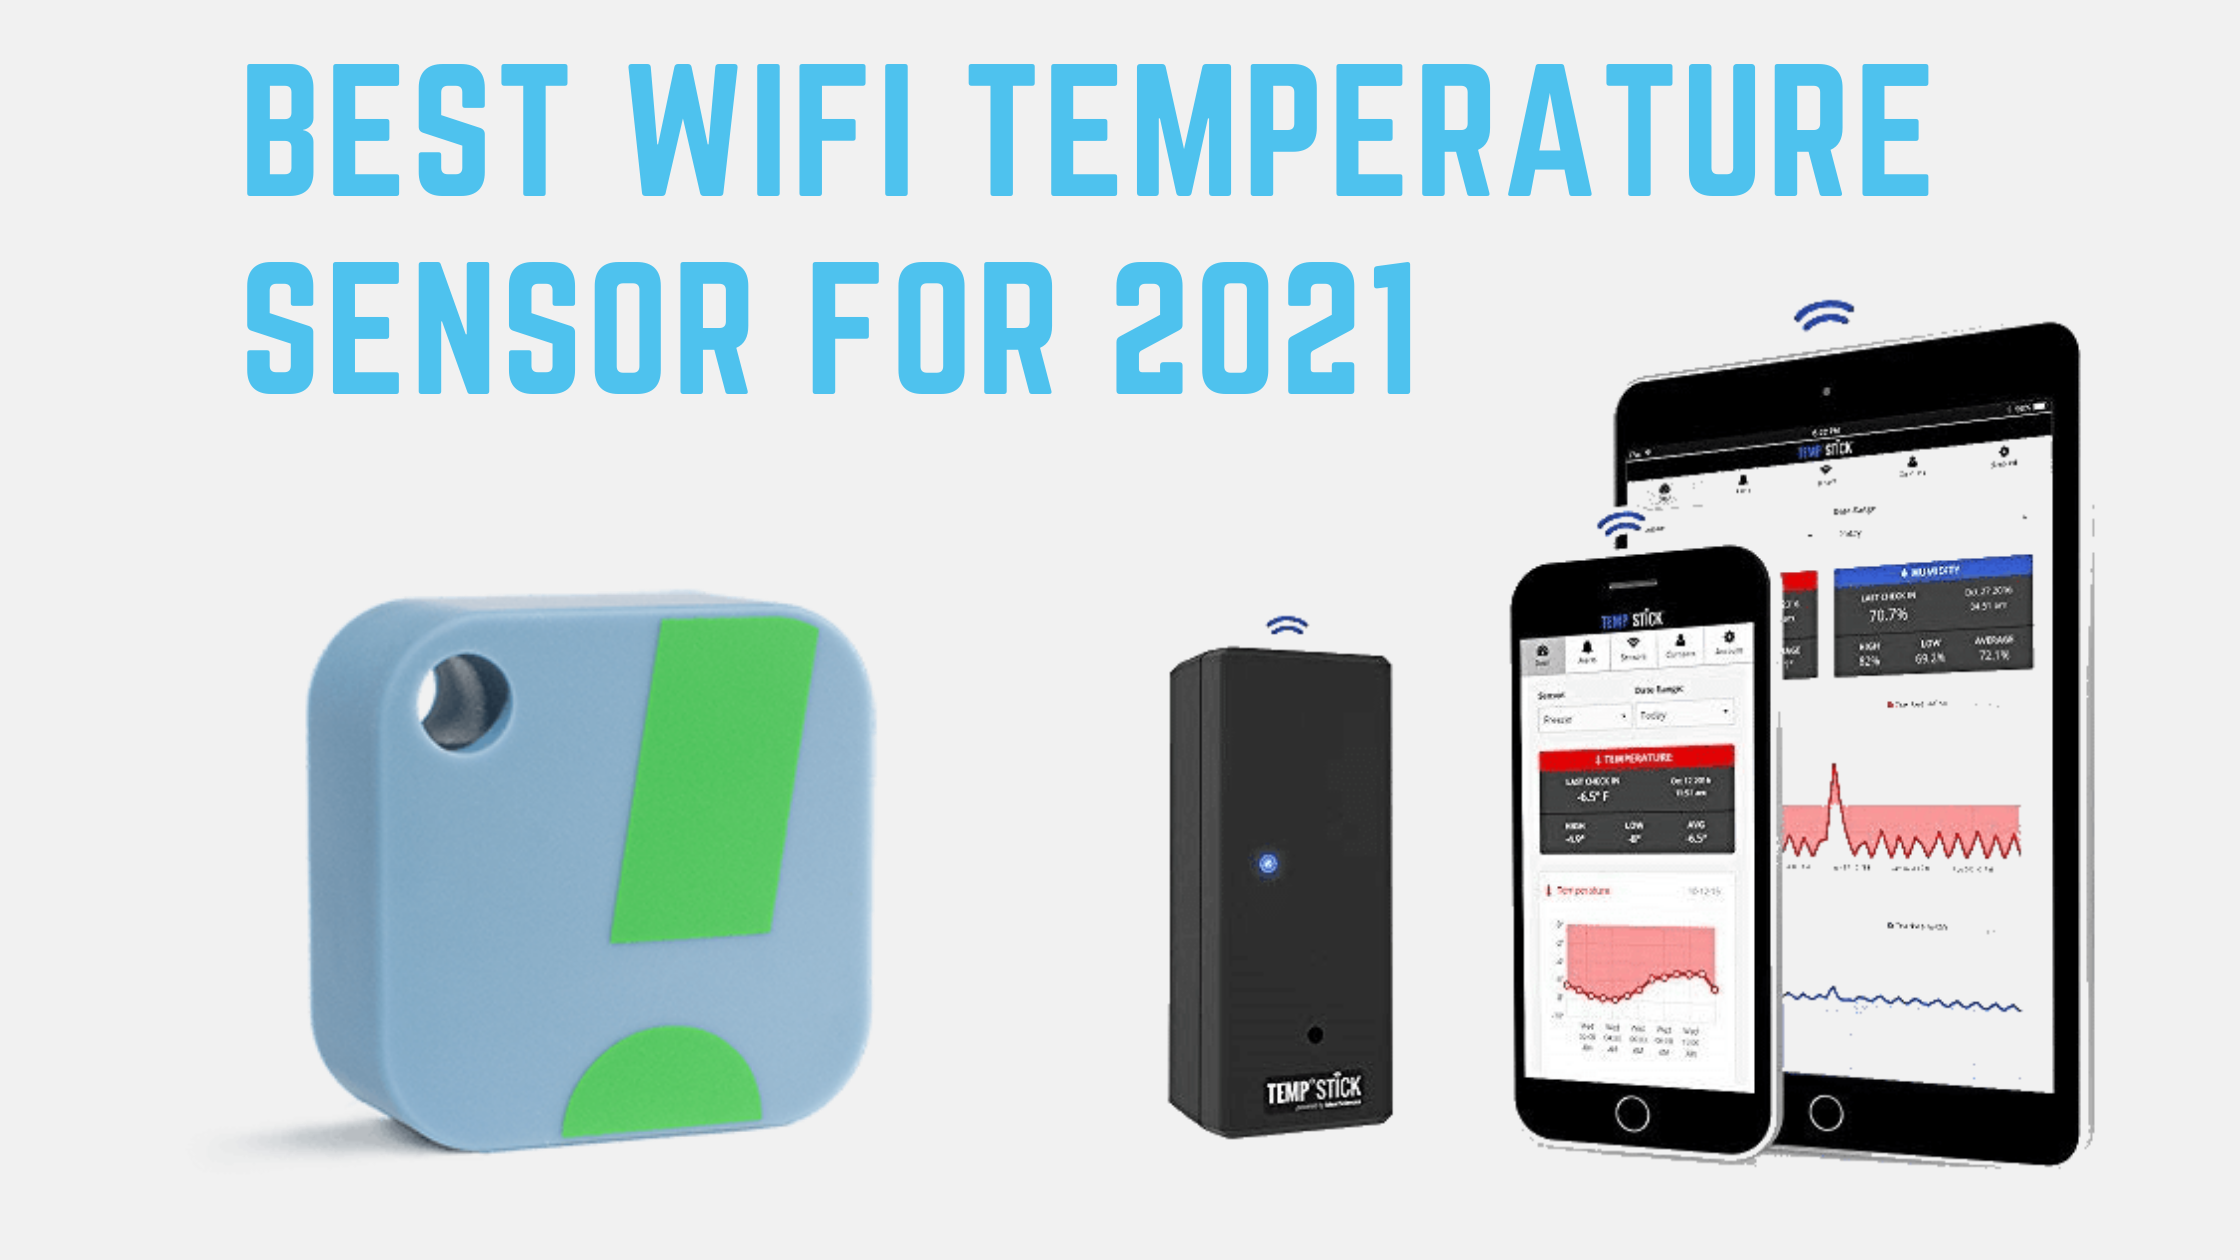 13 Best wifi temperature sensor